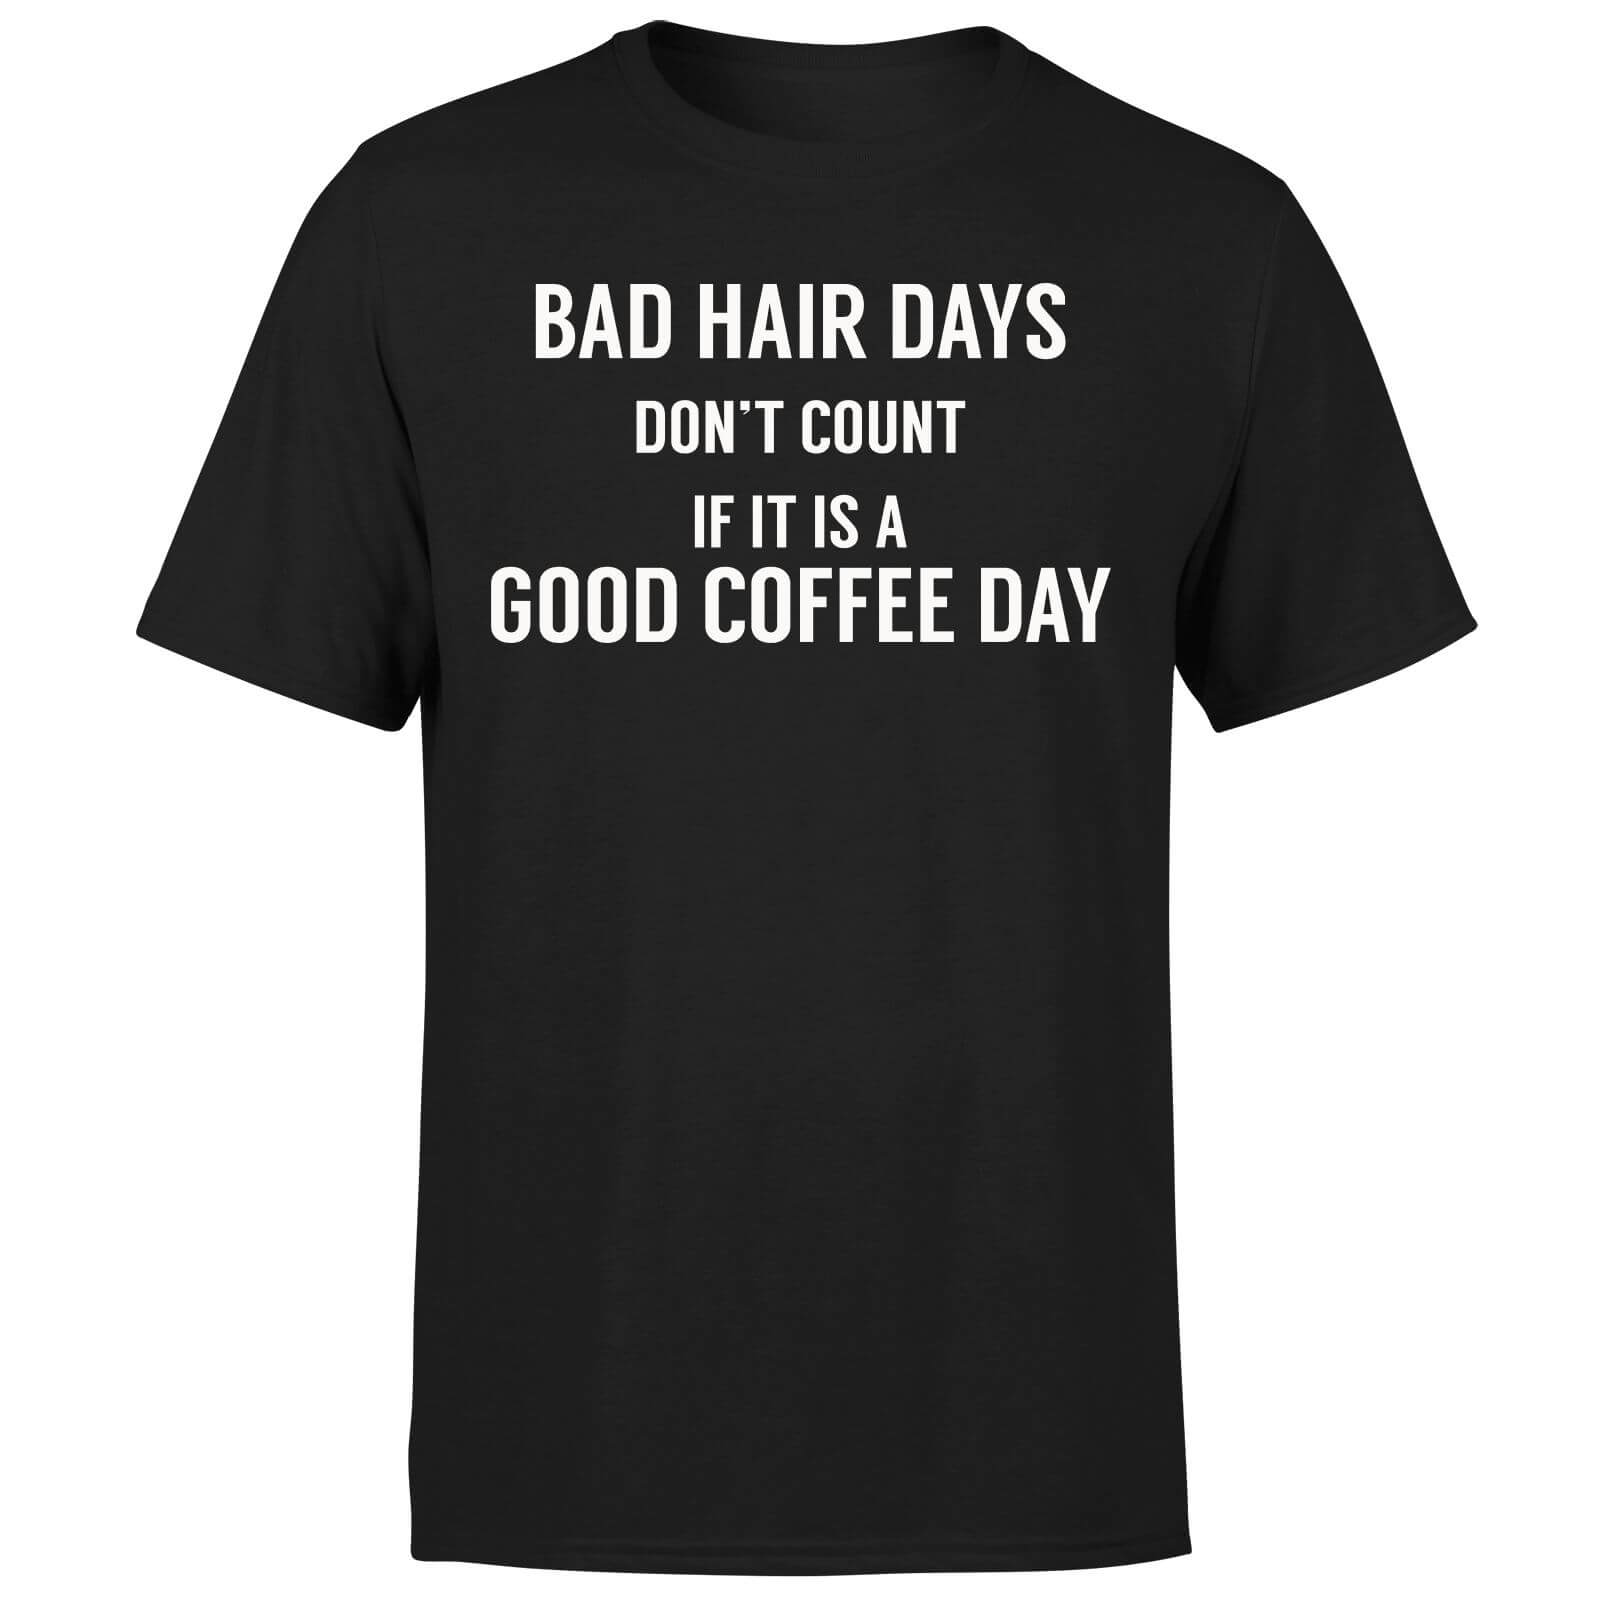 Bad Hair Days Don't Count T-Shirt - Black - S - Black